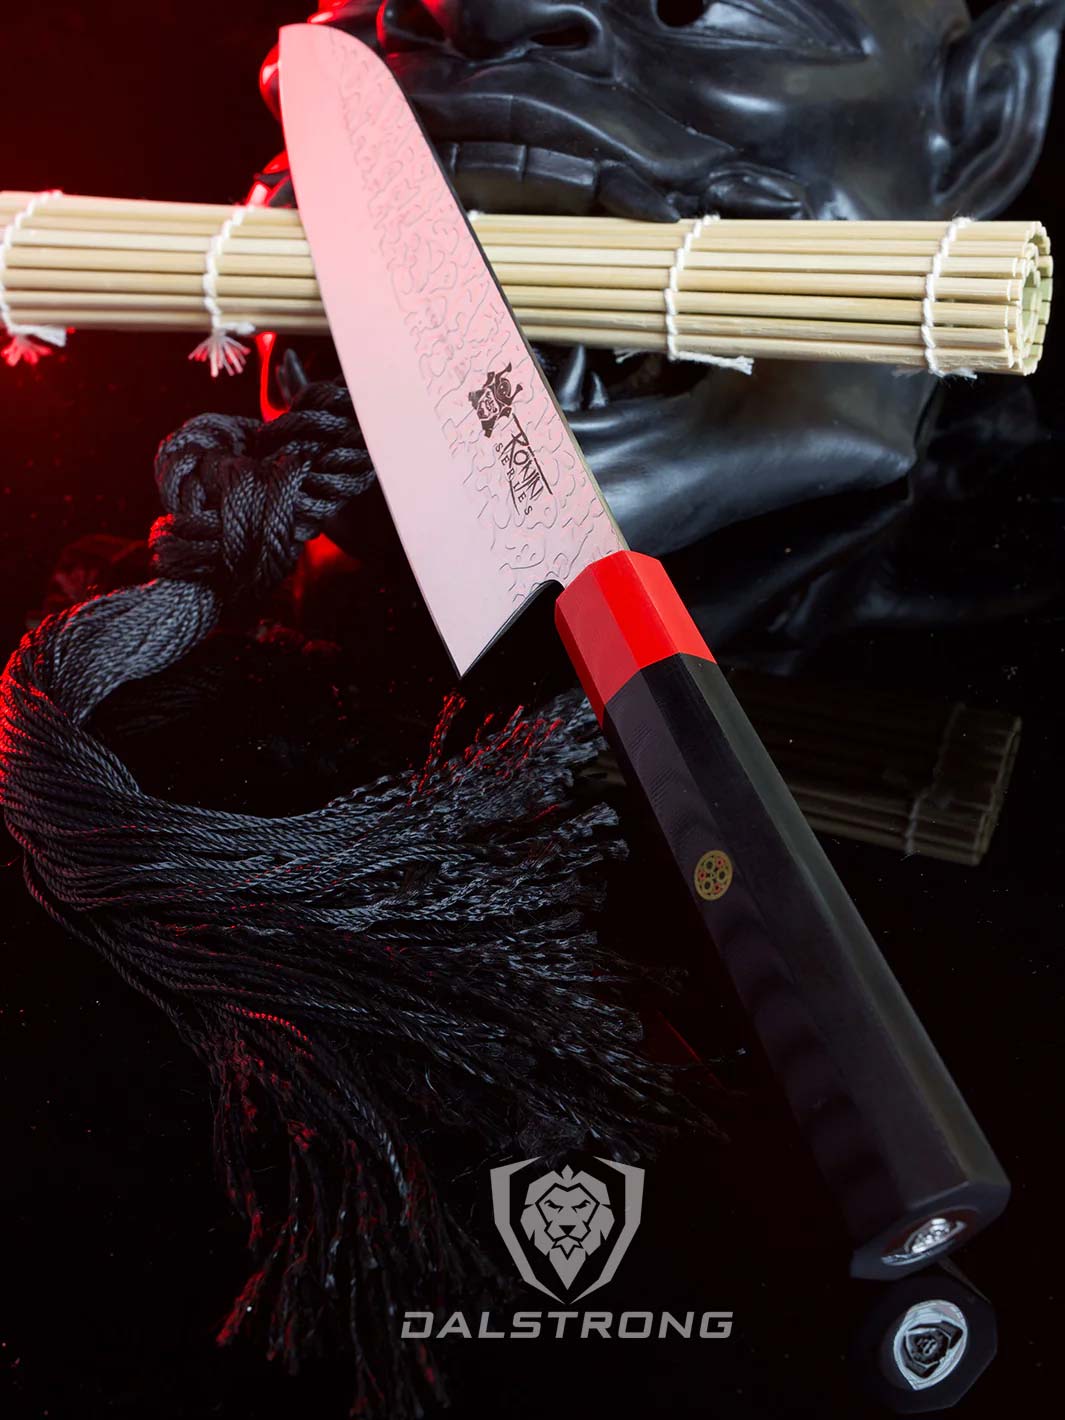 Acacia Wood Magnetic Knife Holder Chef Santoku Japanese Knife